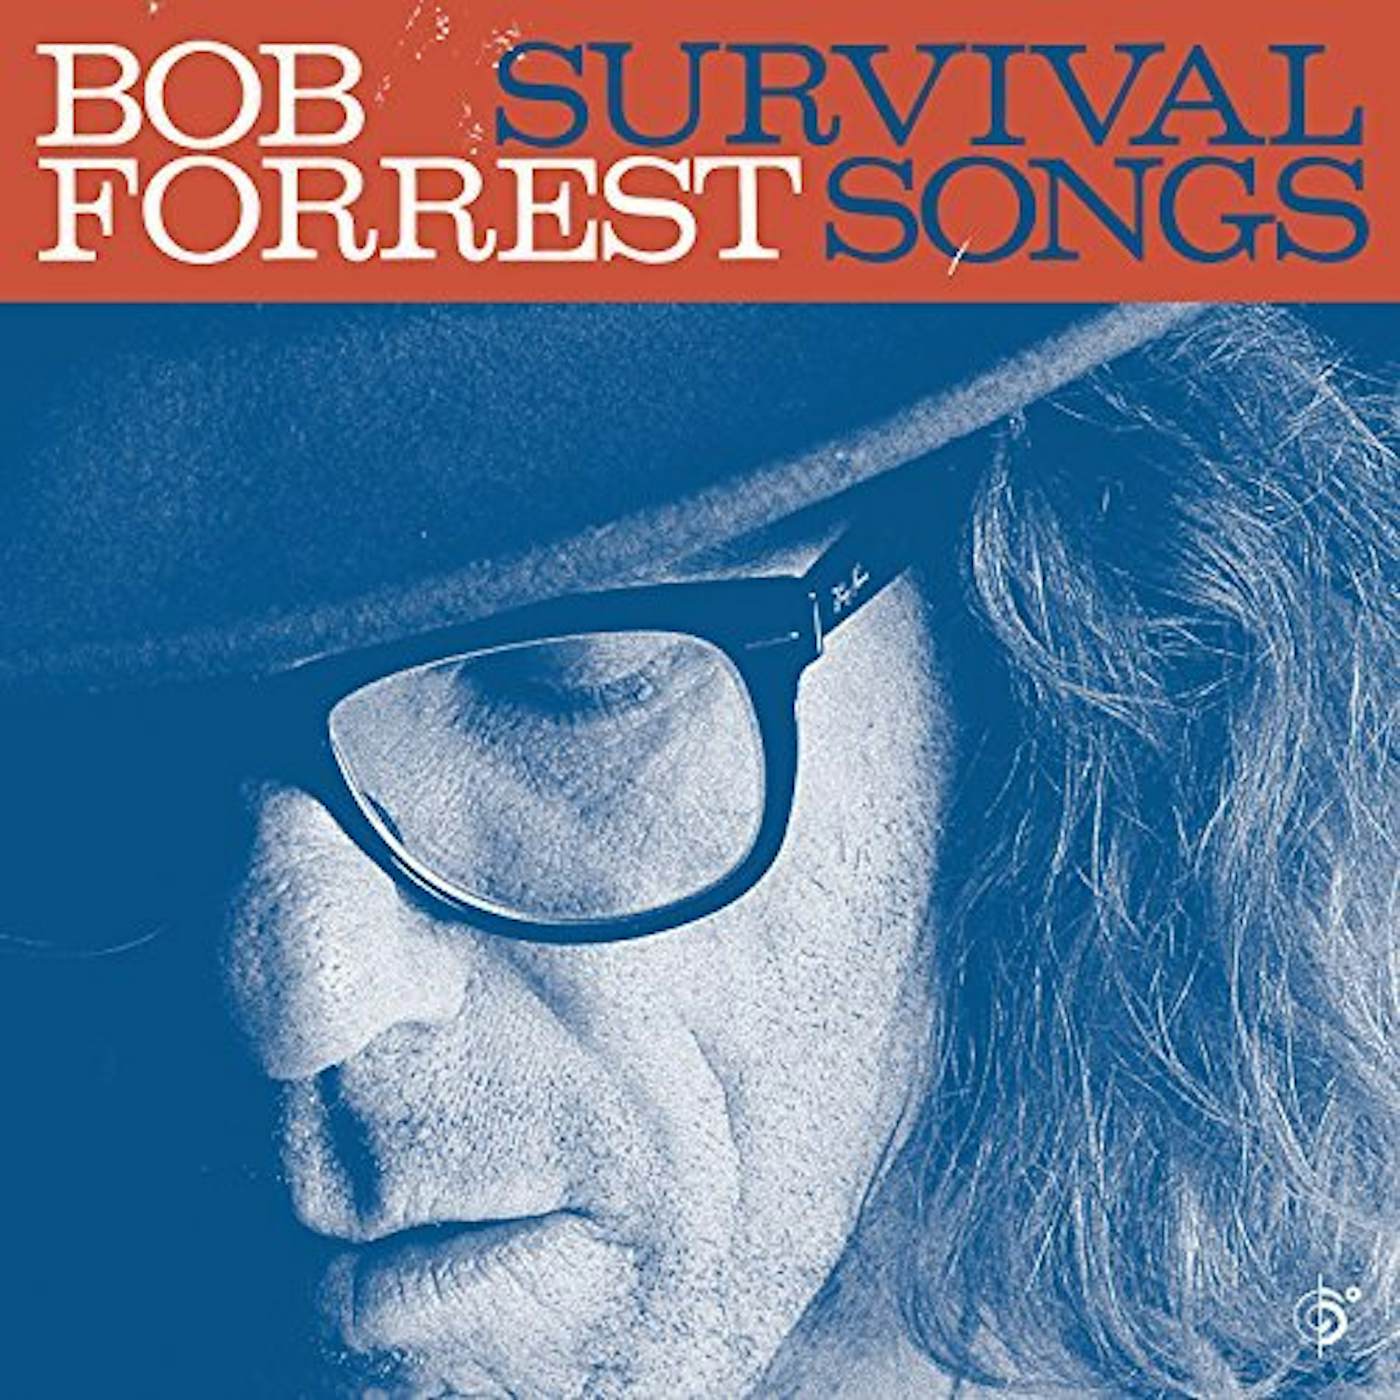 Bob Forrest Survival Songs Vinyl Record